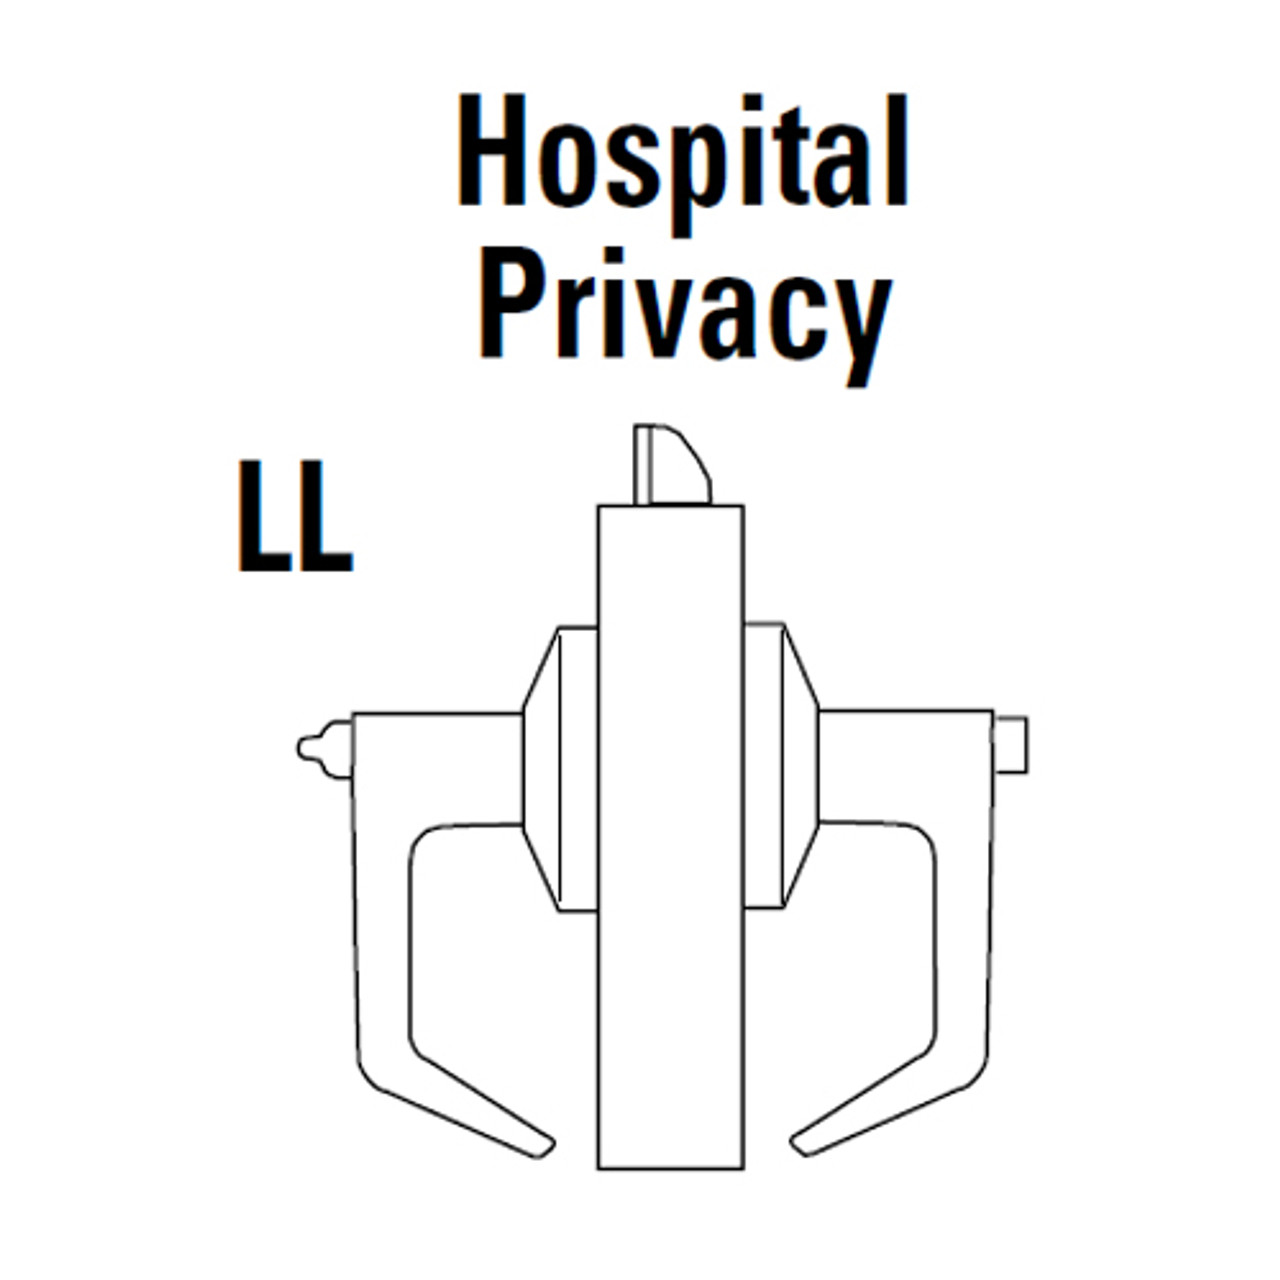 9K30LL14LS3619 Best 9K Series Hospital Privacy Heavy Duty Cylindrical Lever Locks in Satin Nickel